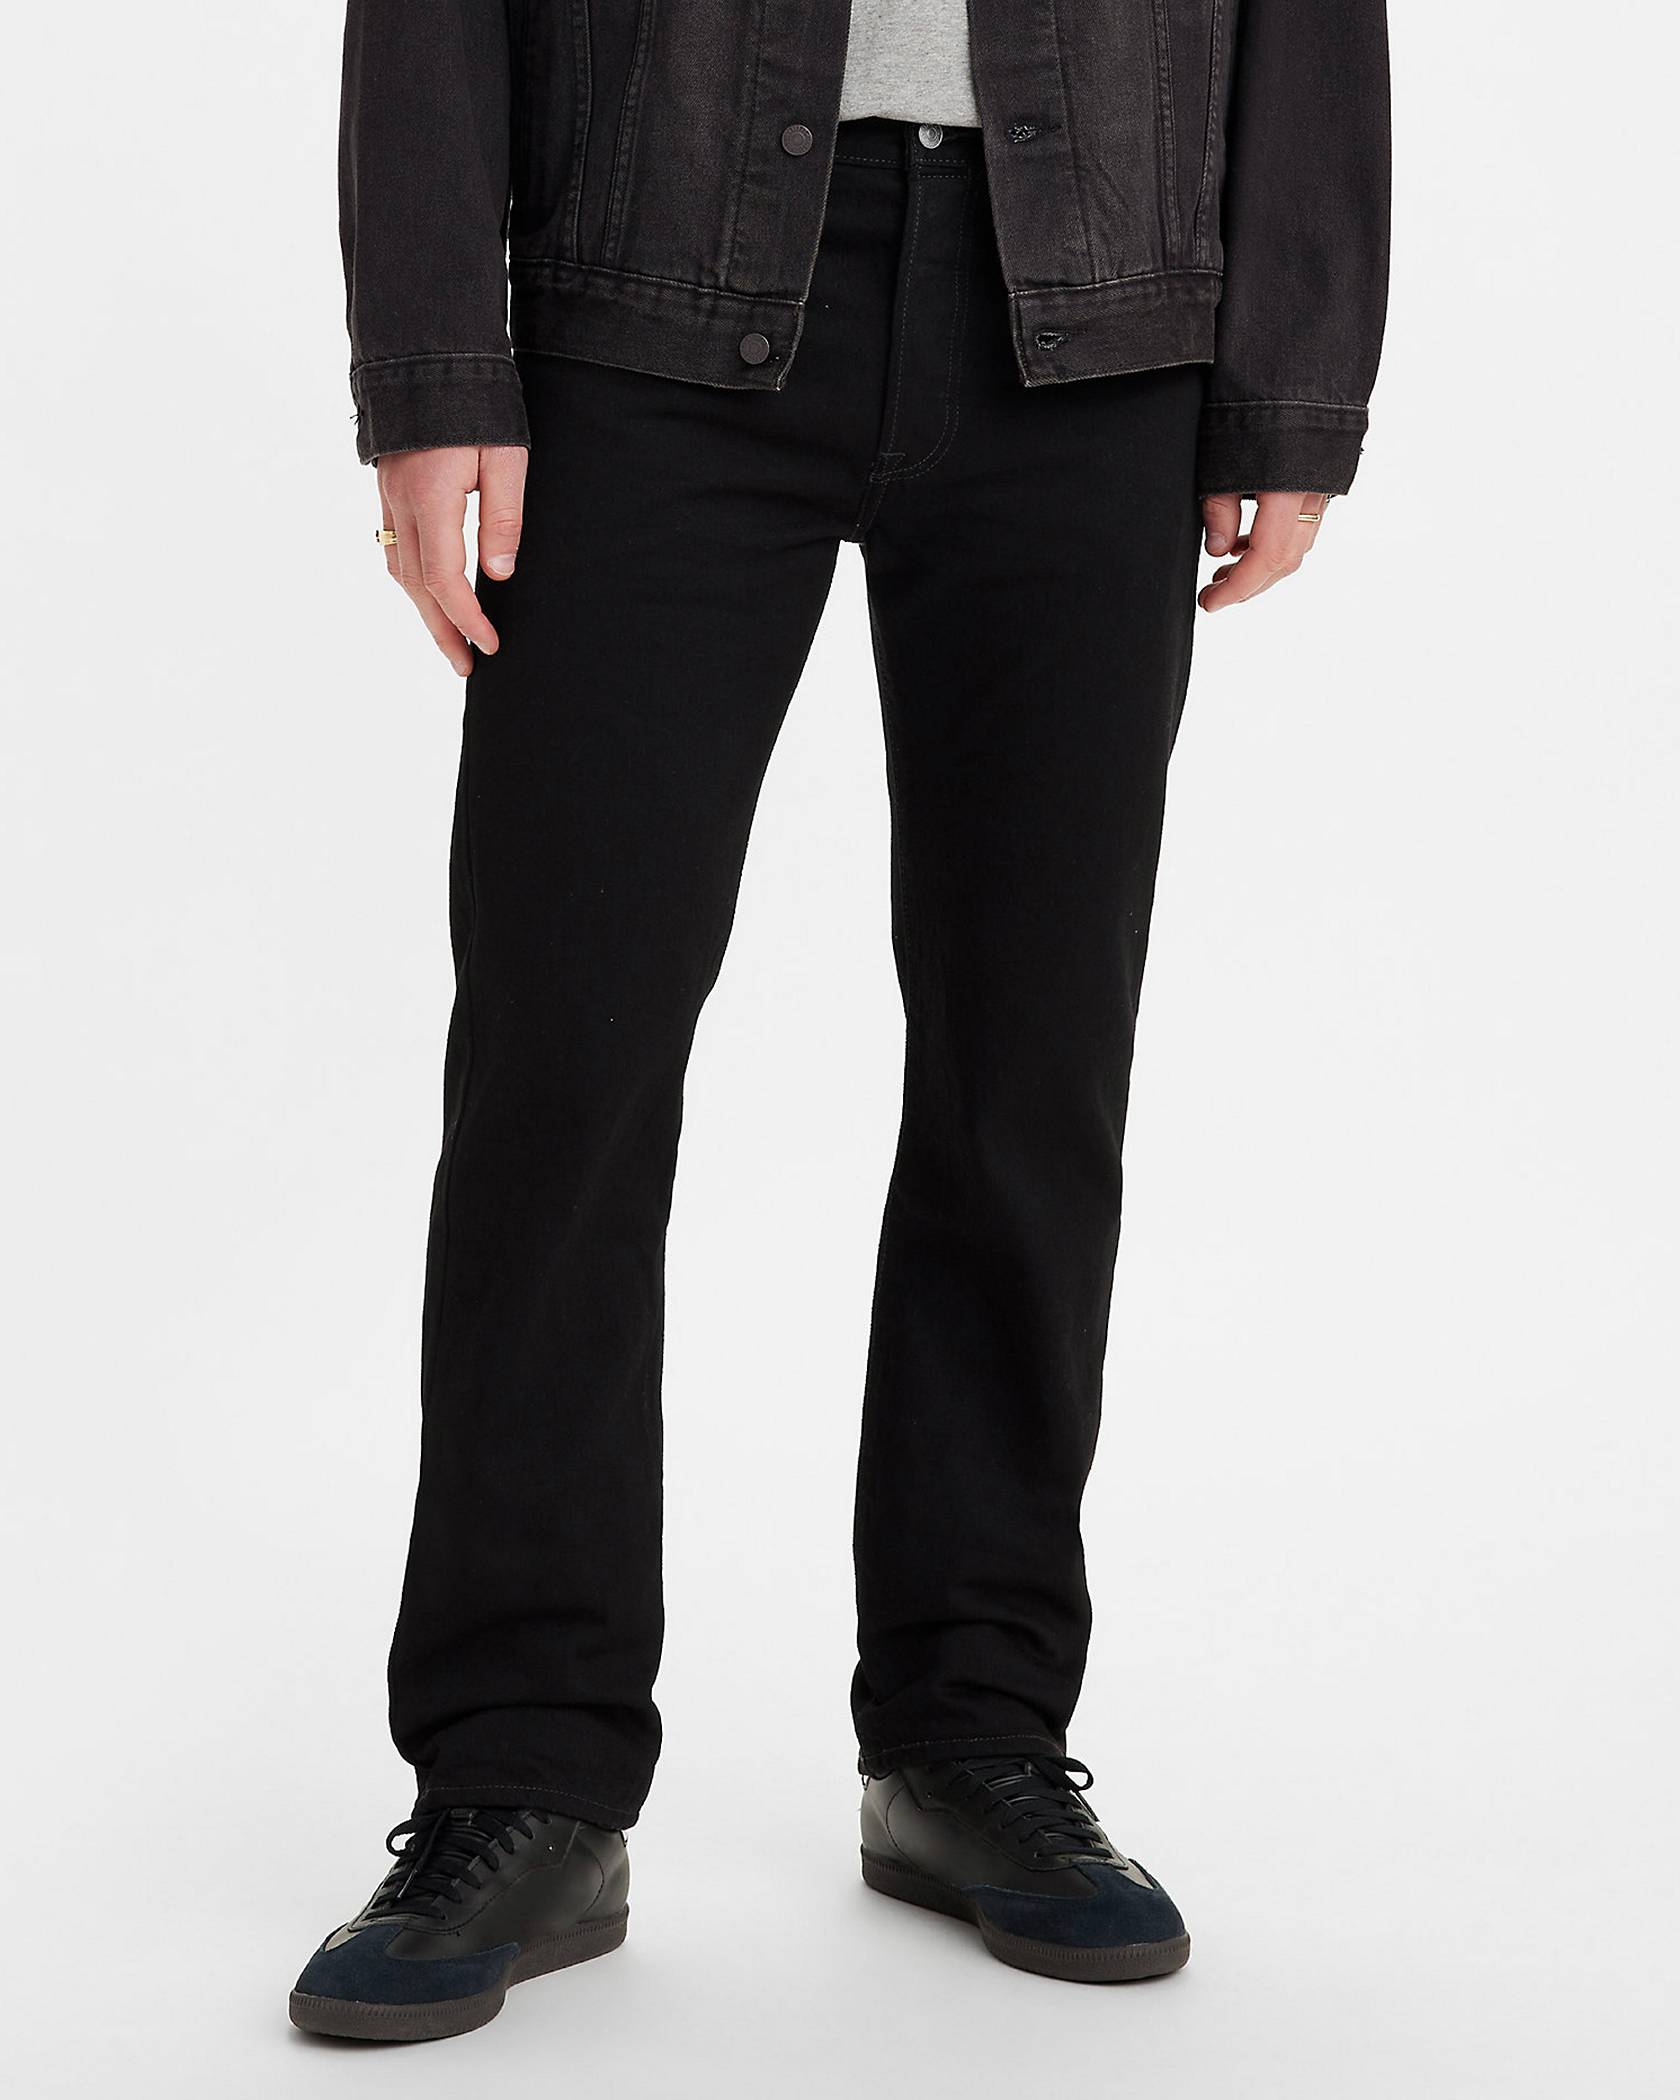 Man wearing black 501 jeans. levi_black_jeans_for_men